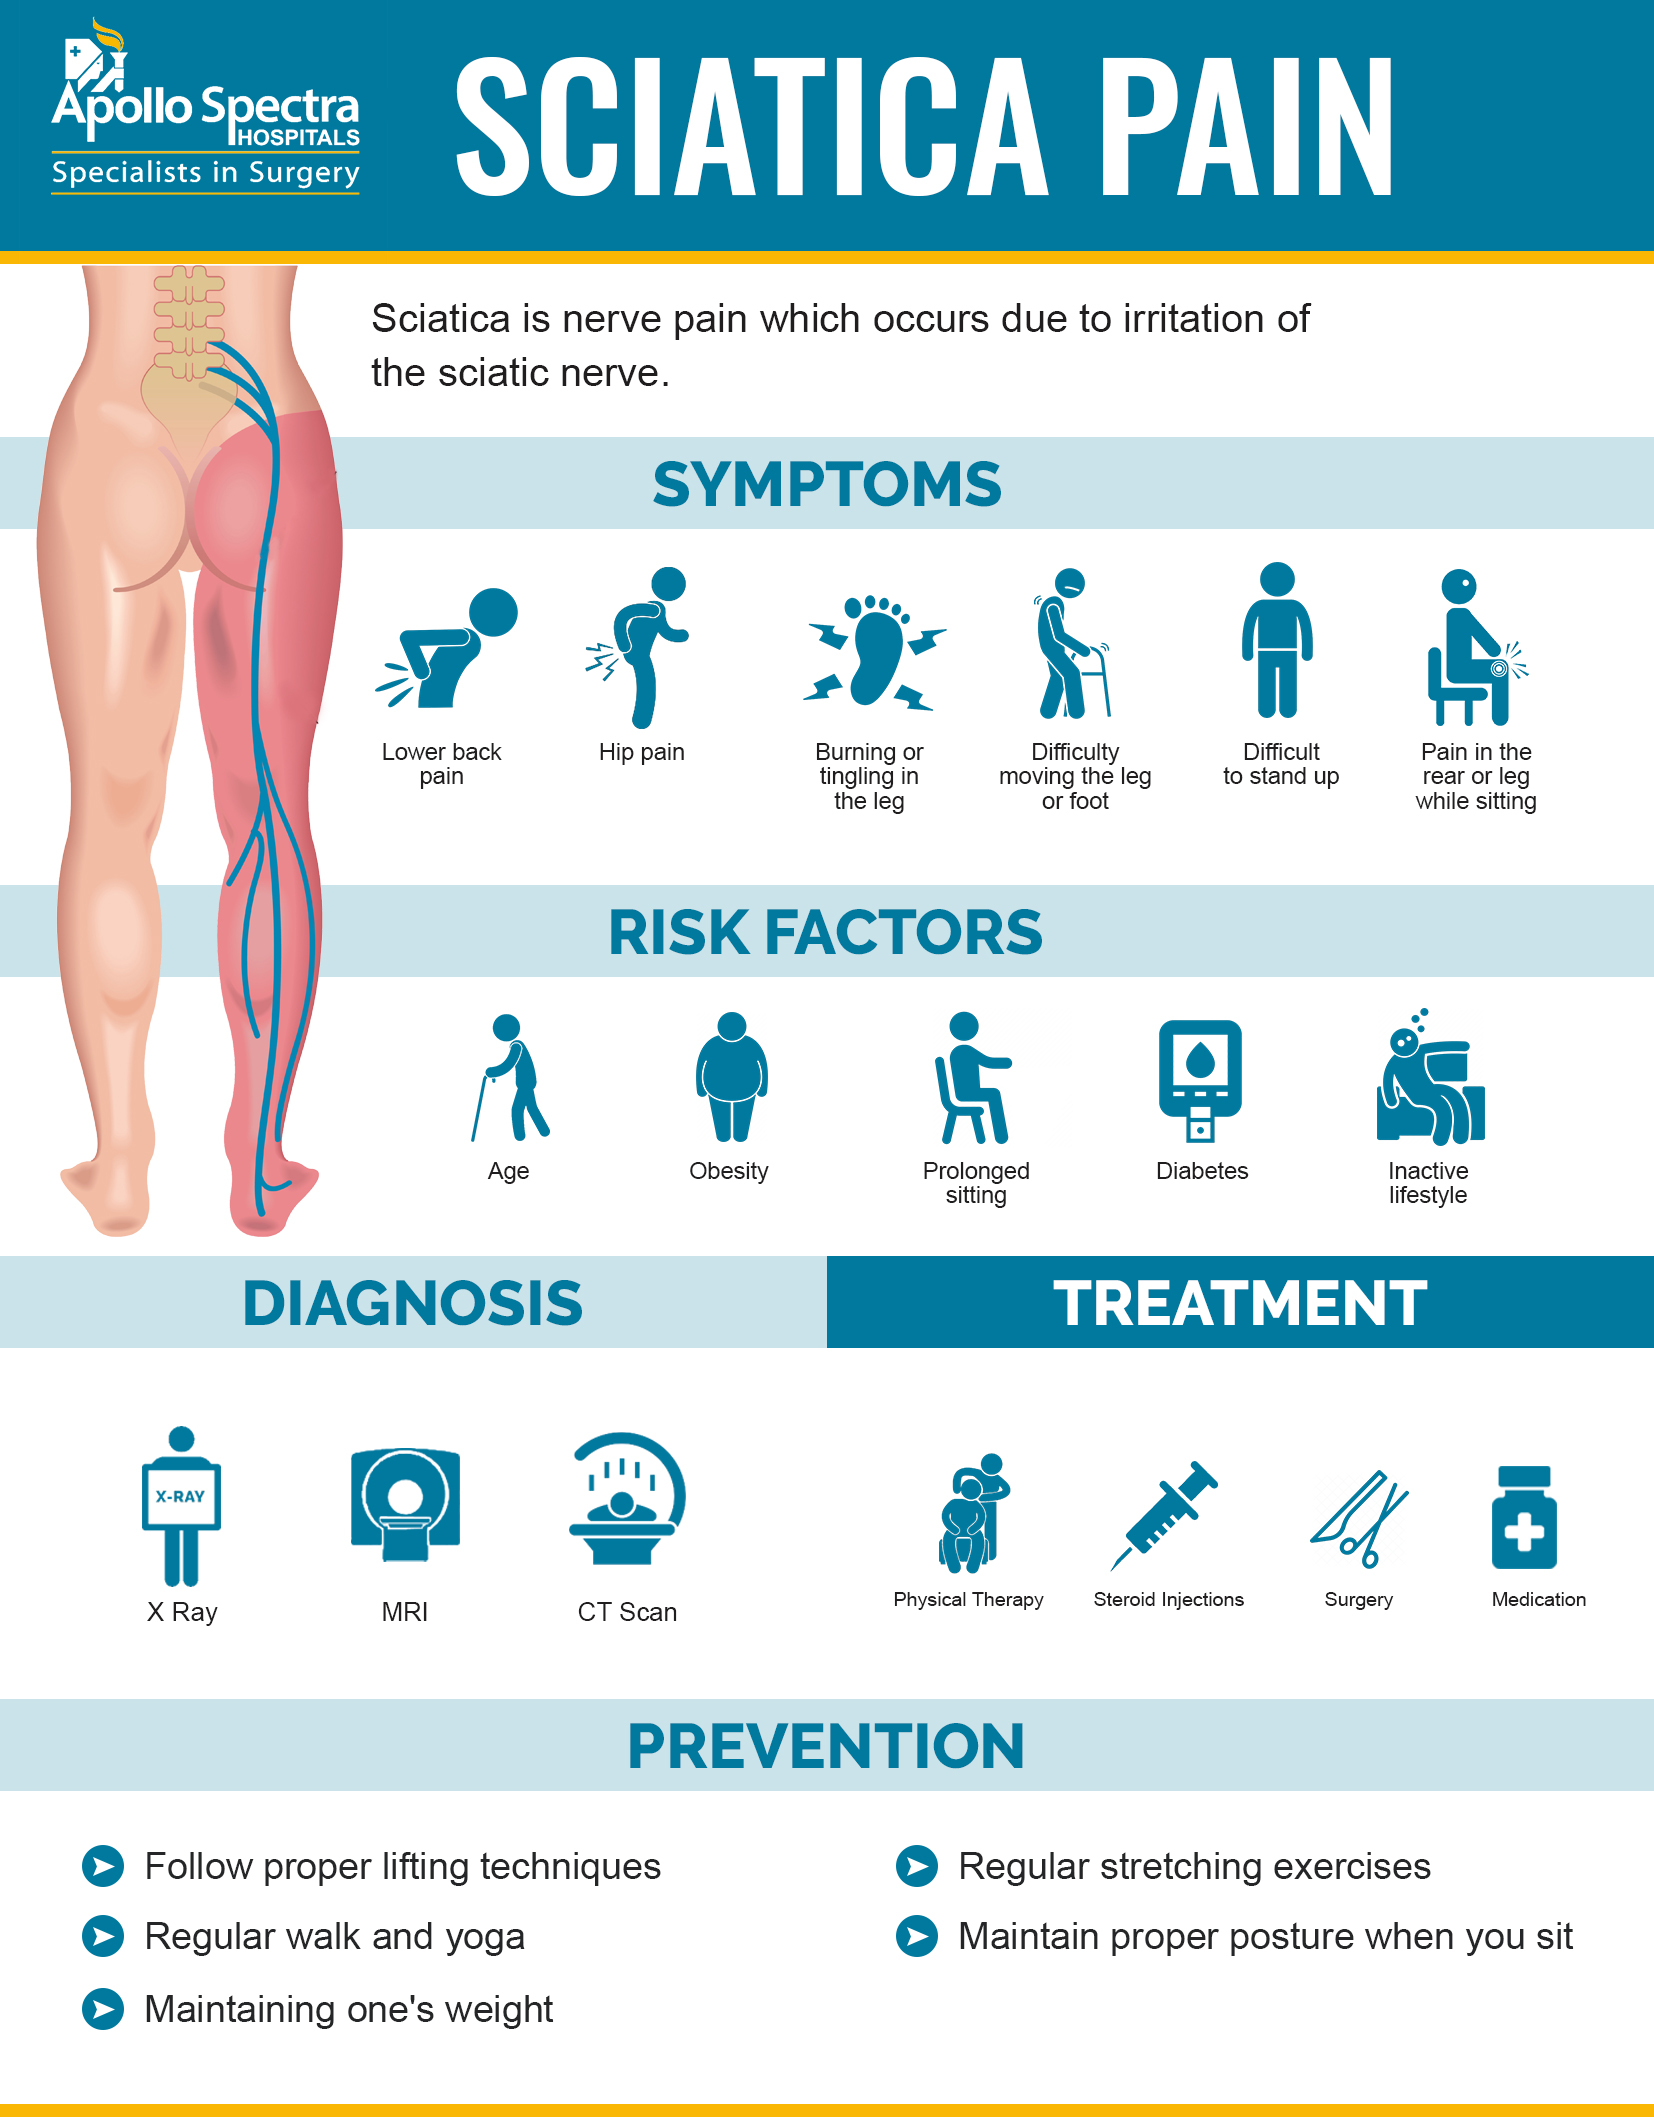 Piriformis syndrome, symptoms, prevention and treatment options